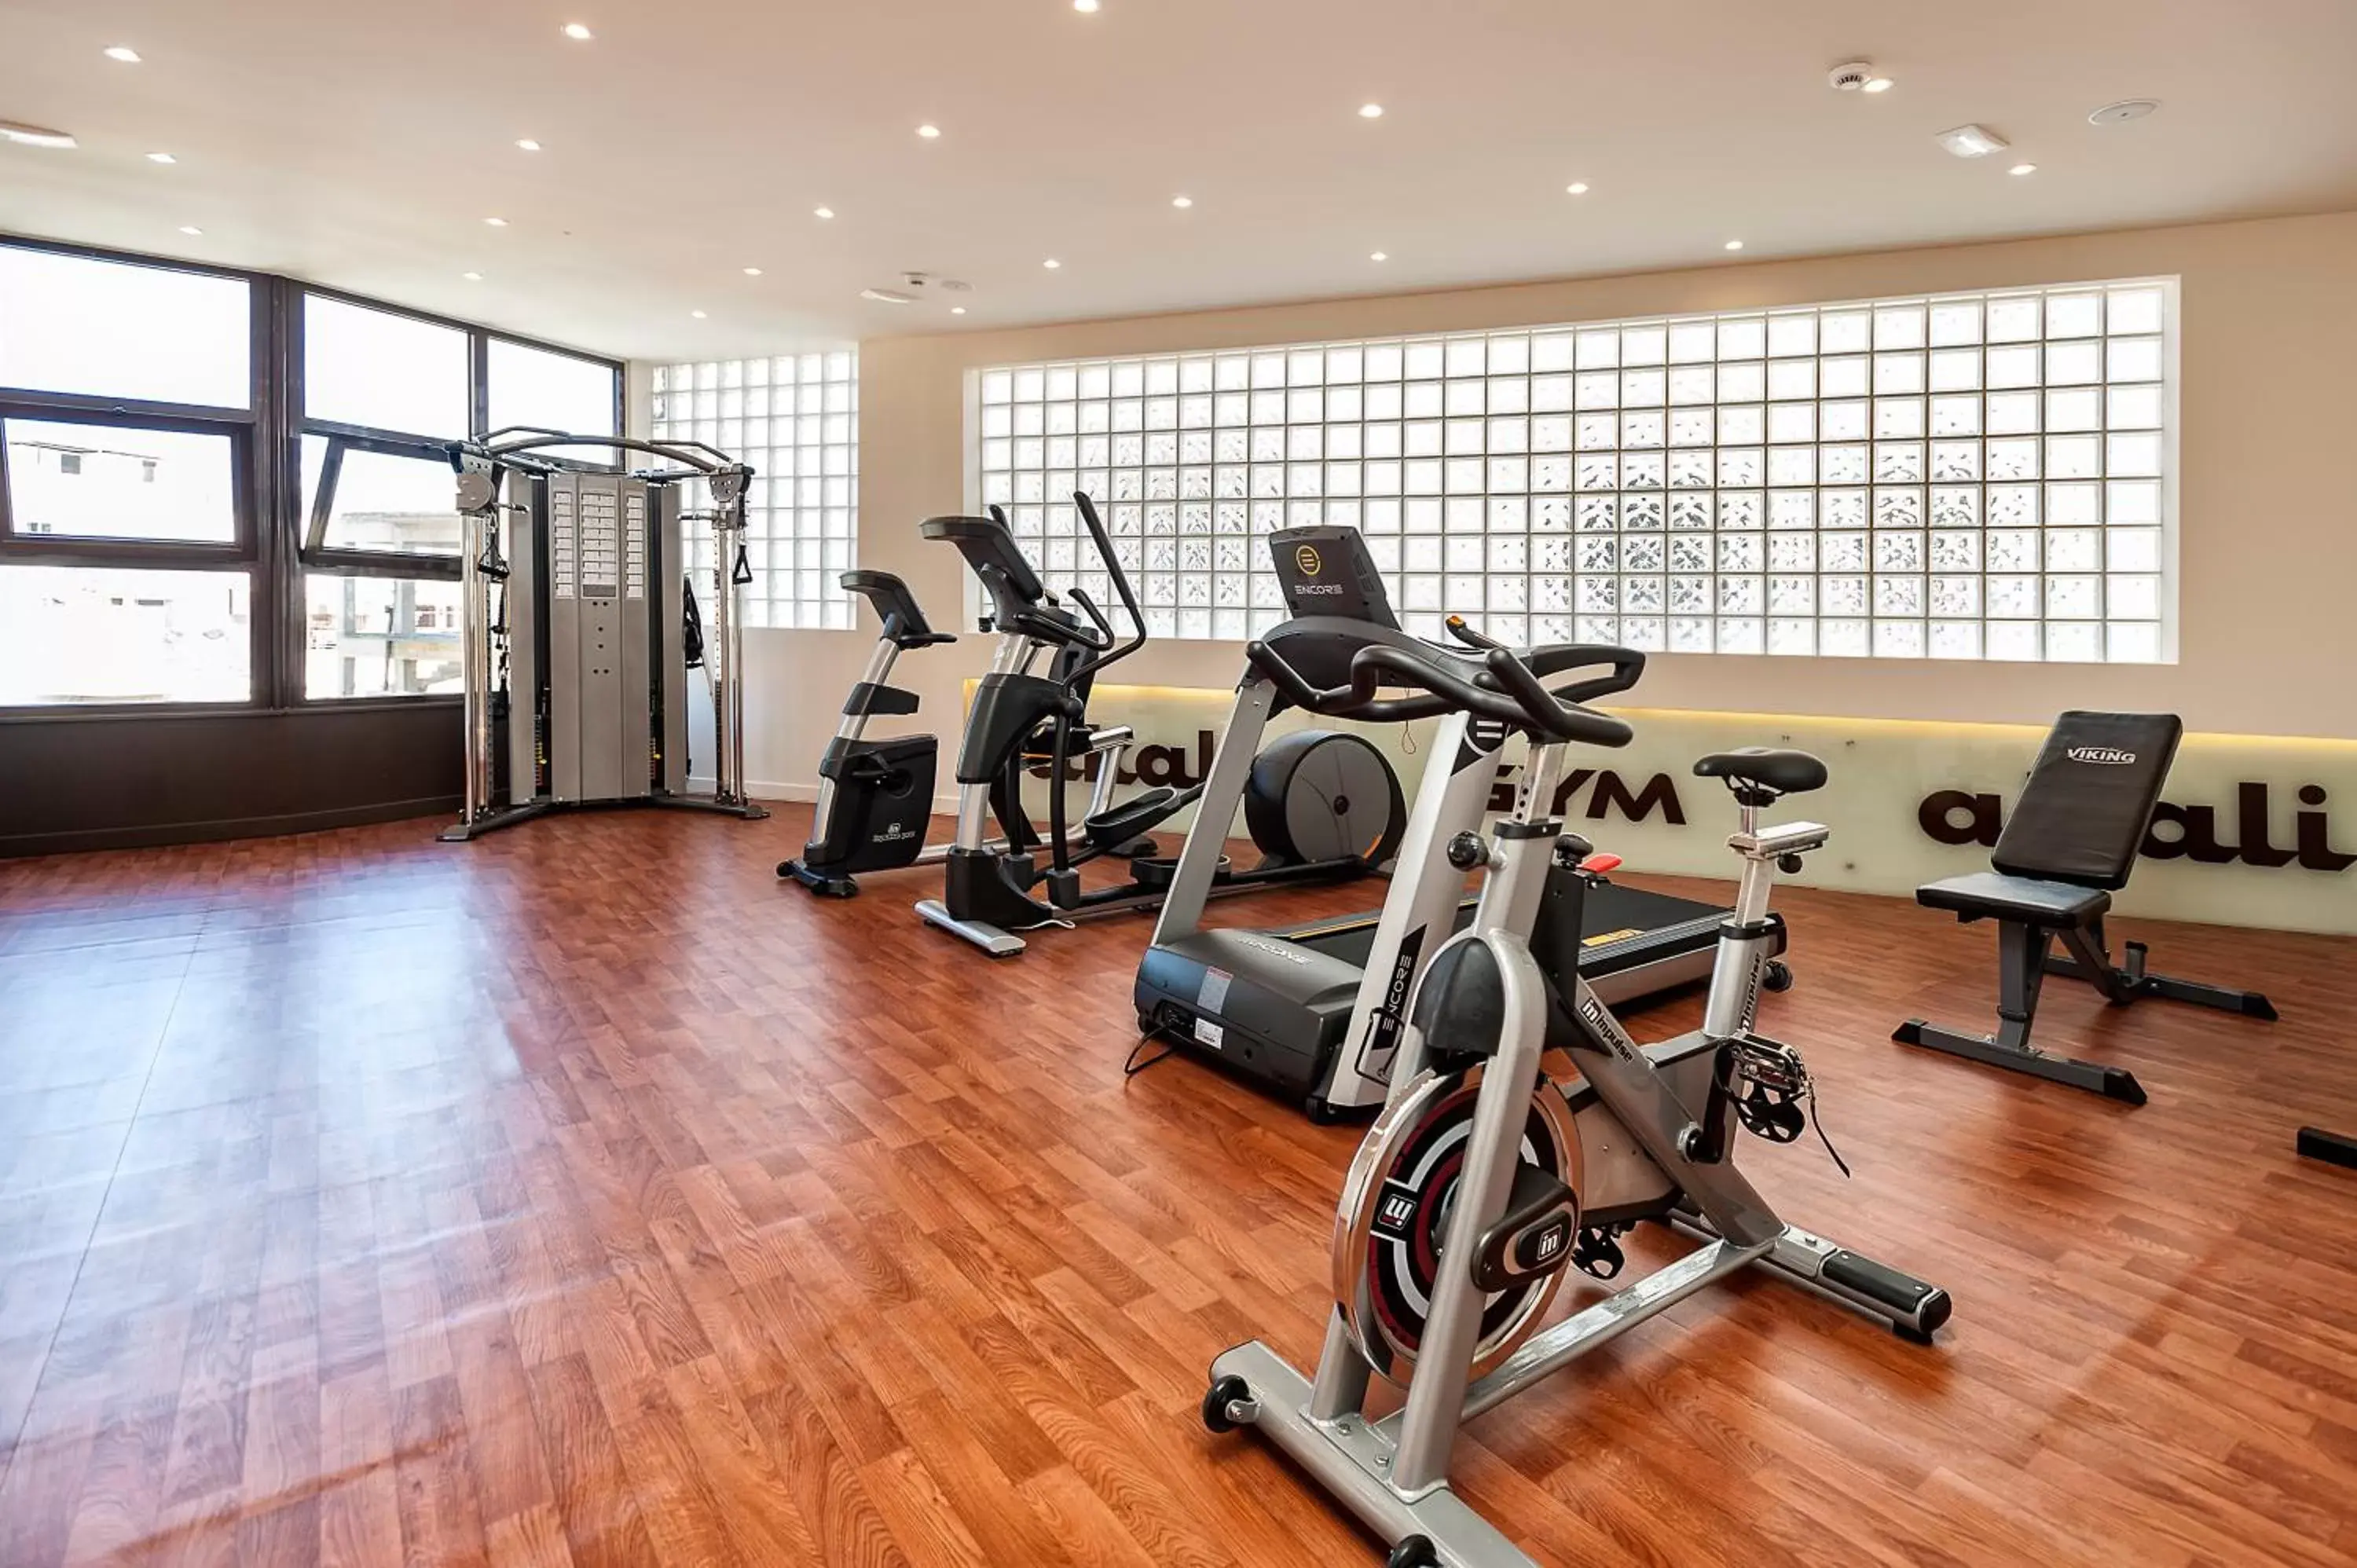 Fitness centre/facilities, Fitness Center/Facilities in Civitel Akali Hotel